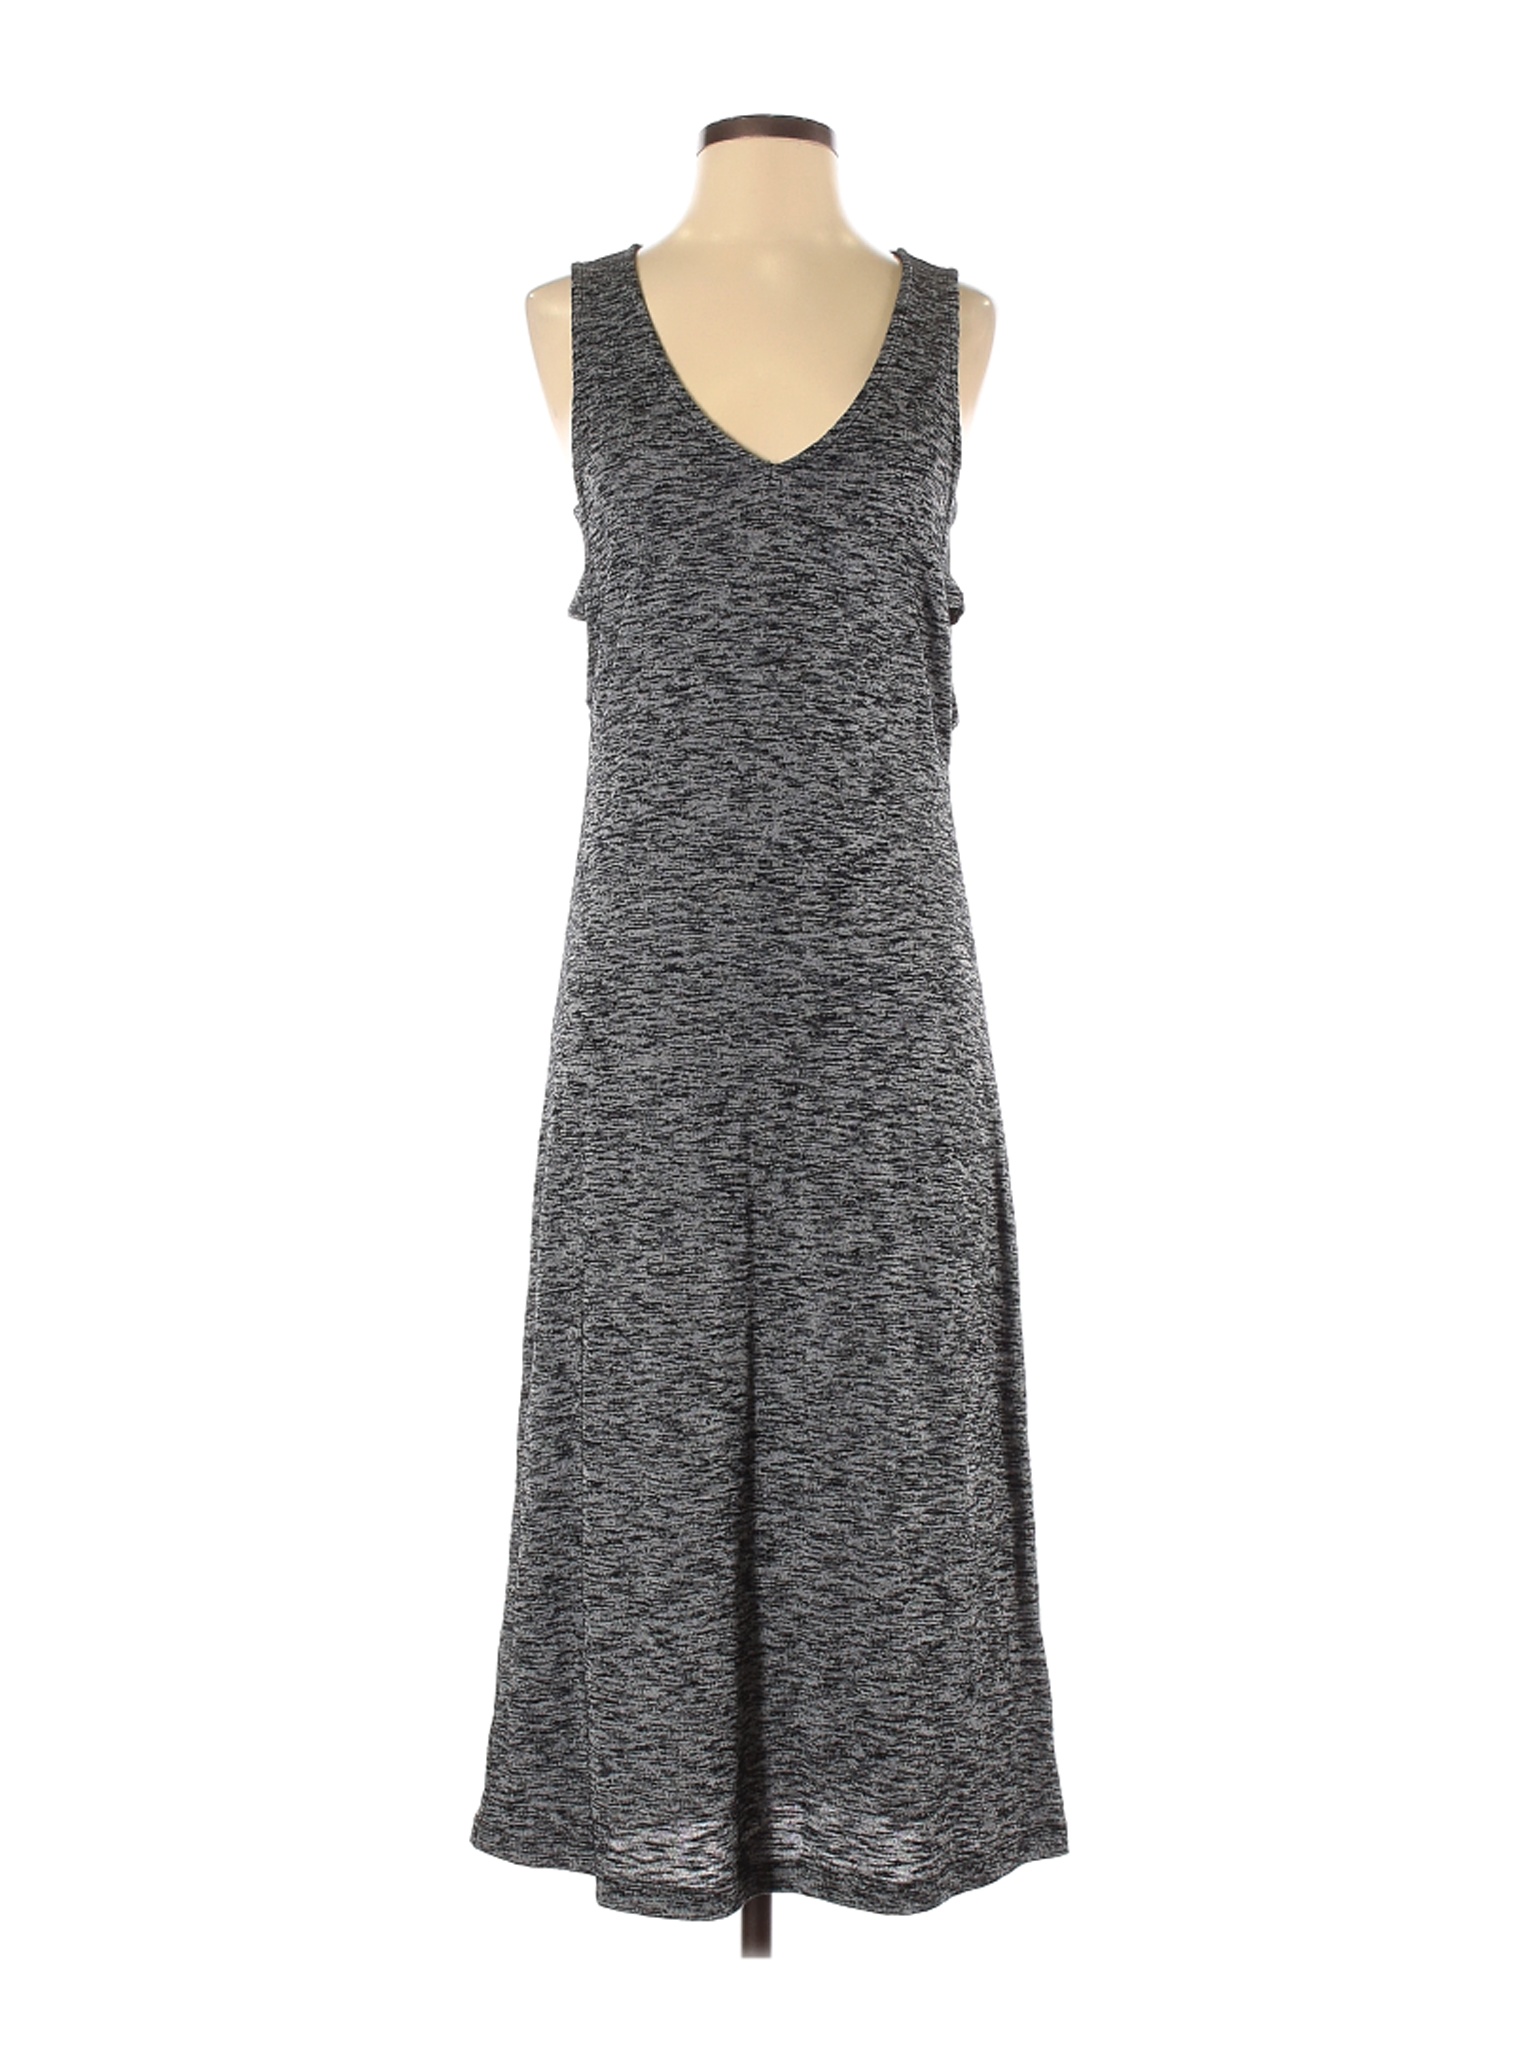 NWT Francesca's Women Gray Casual Dress S | eBay